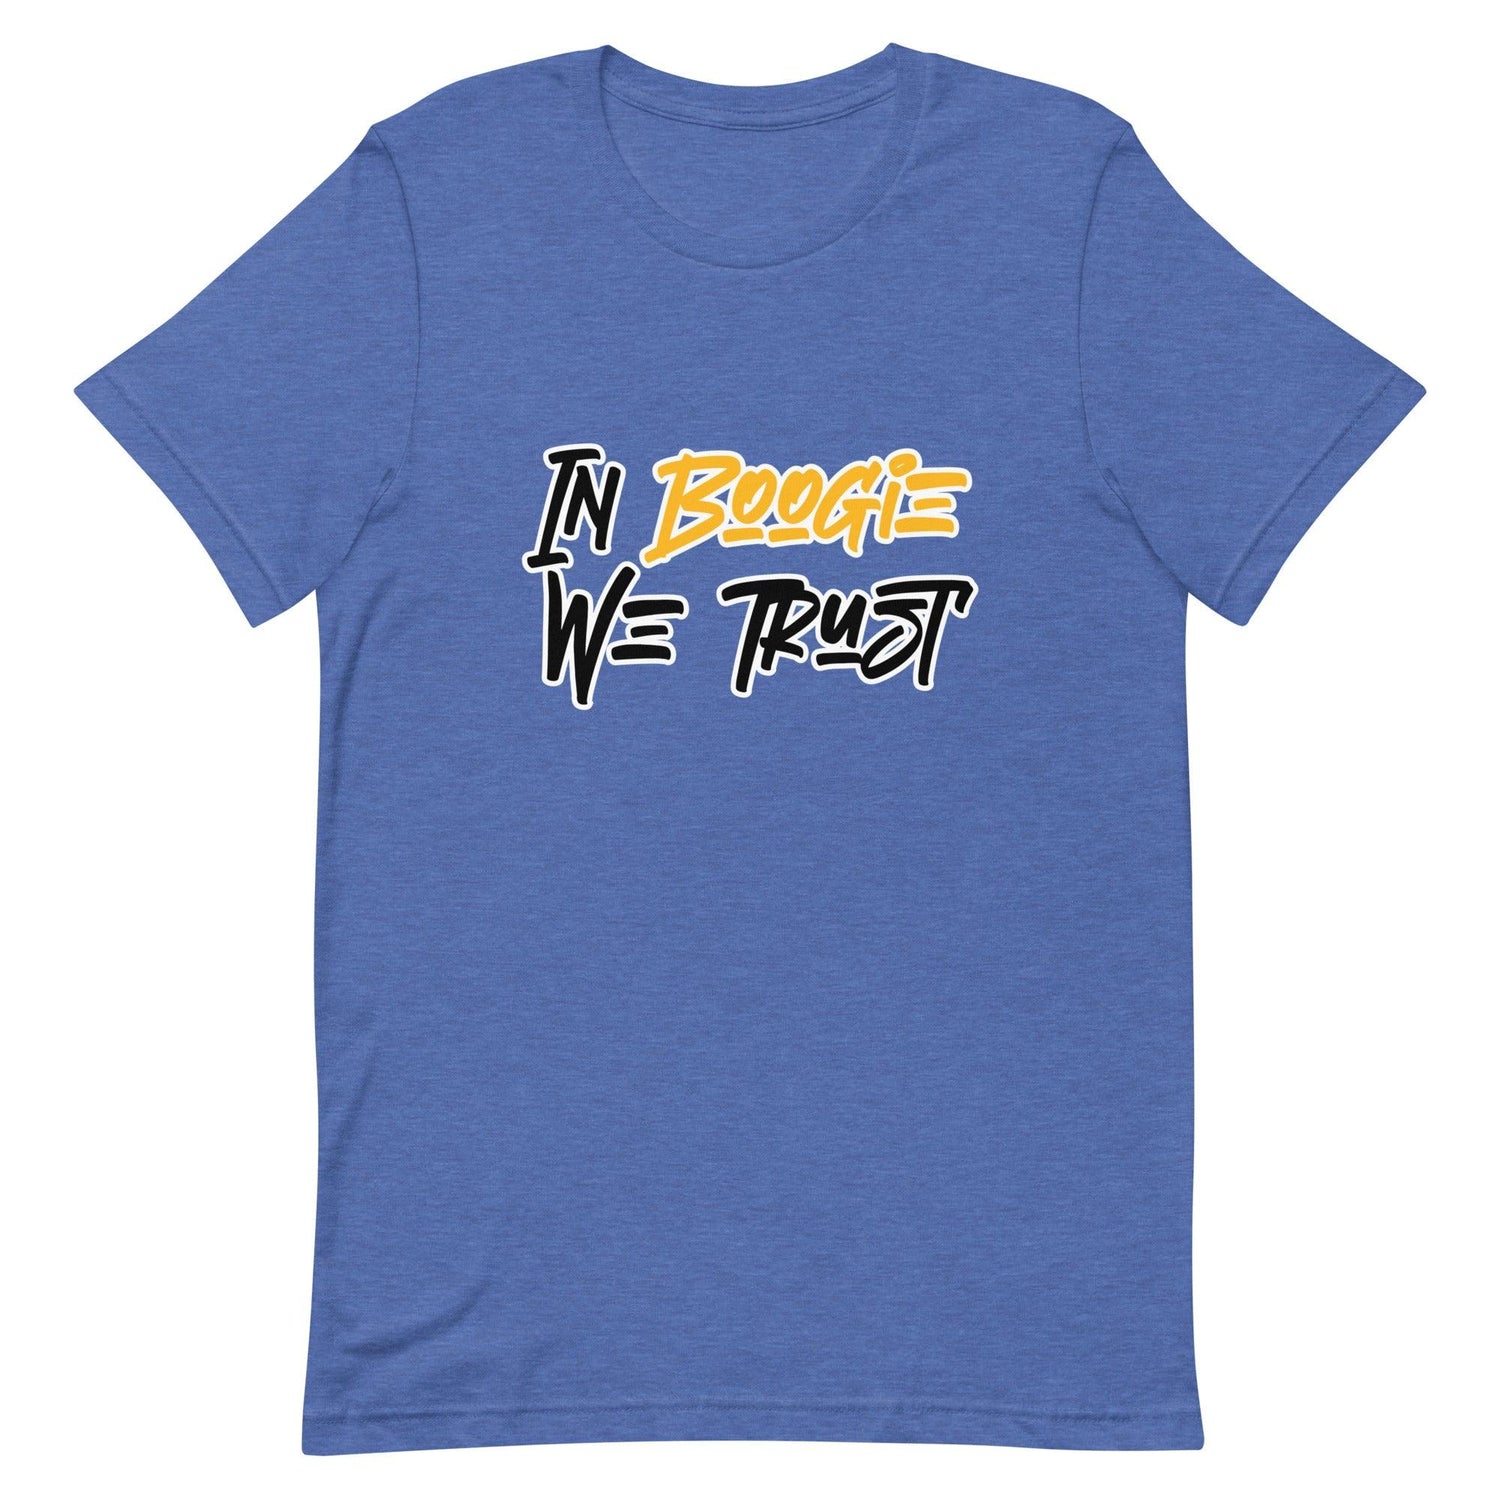 Boogie Roberts "We Trust" t-shirt - Fan Arch